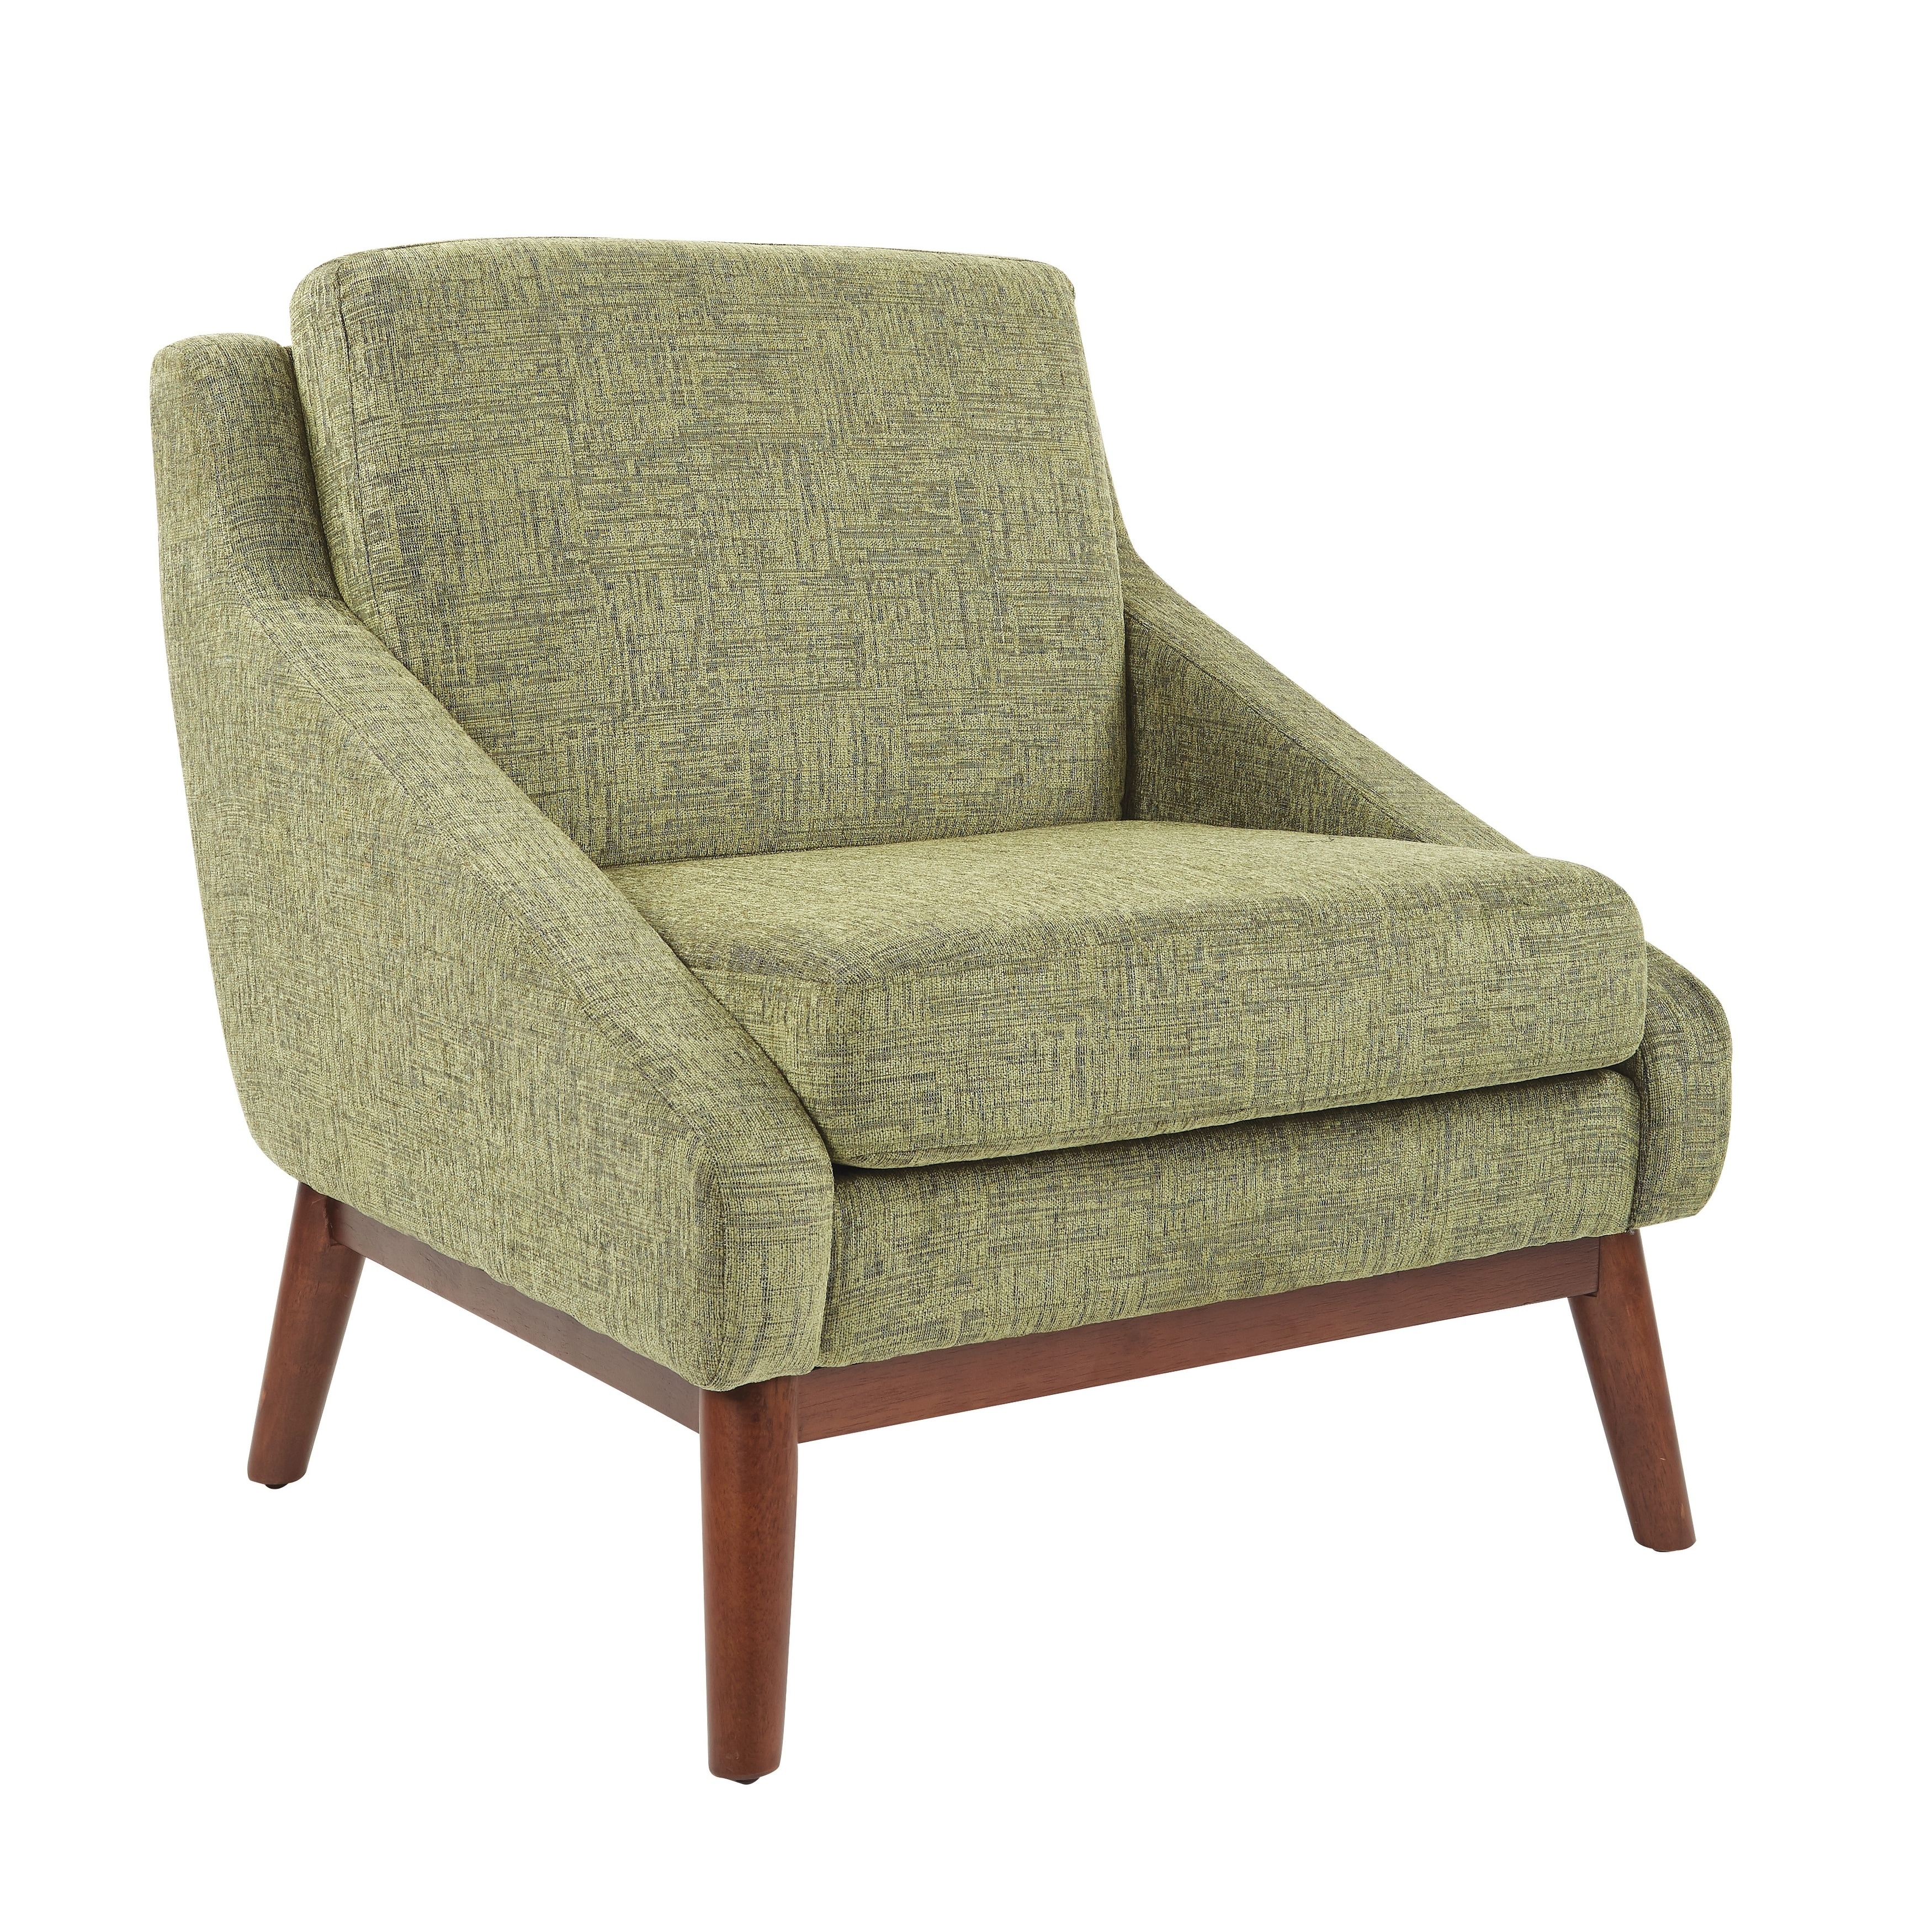 Shop Davenport Chair - Overstock - 27809442